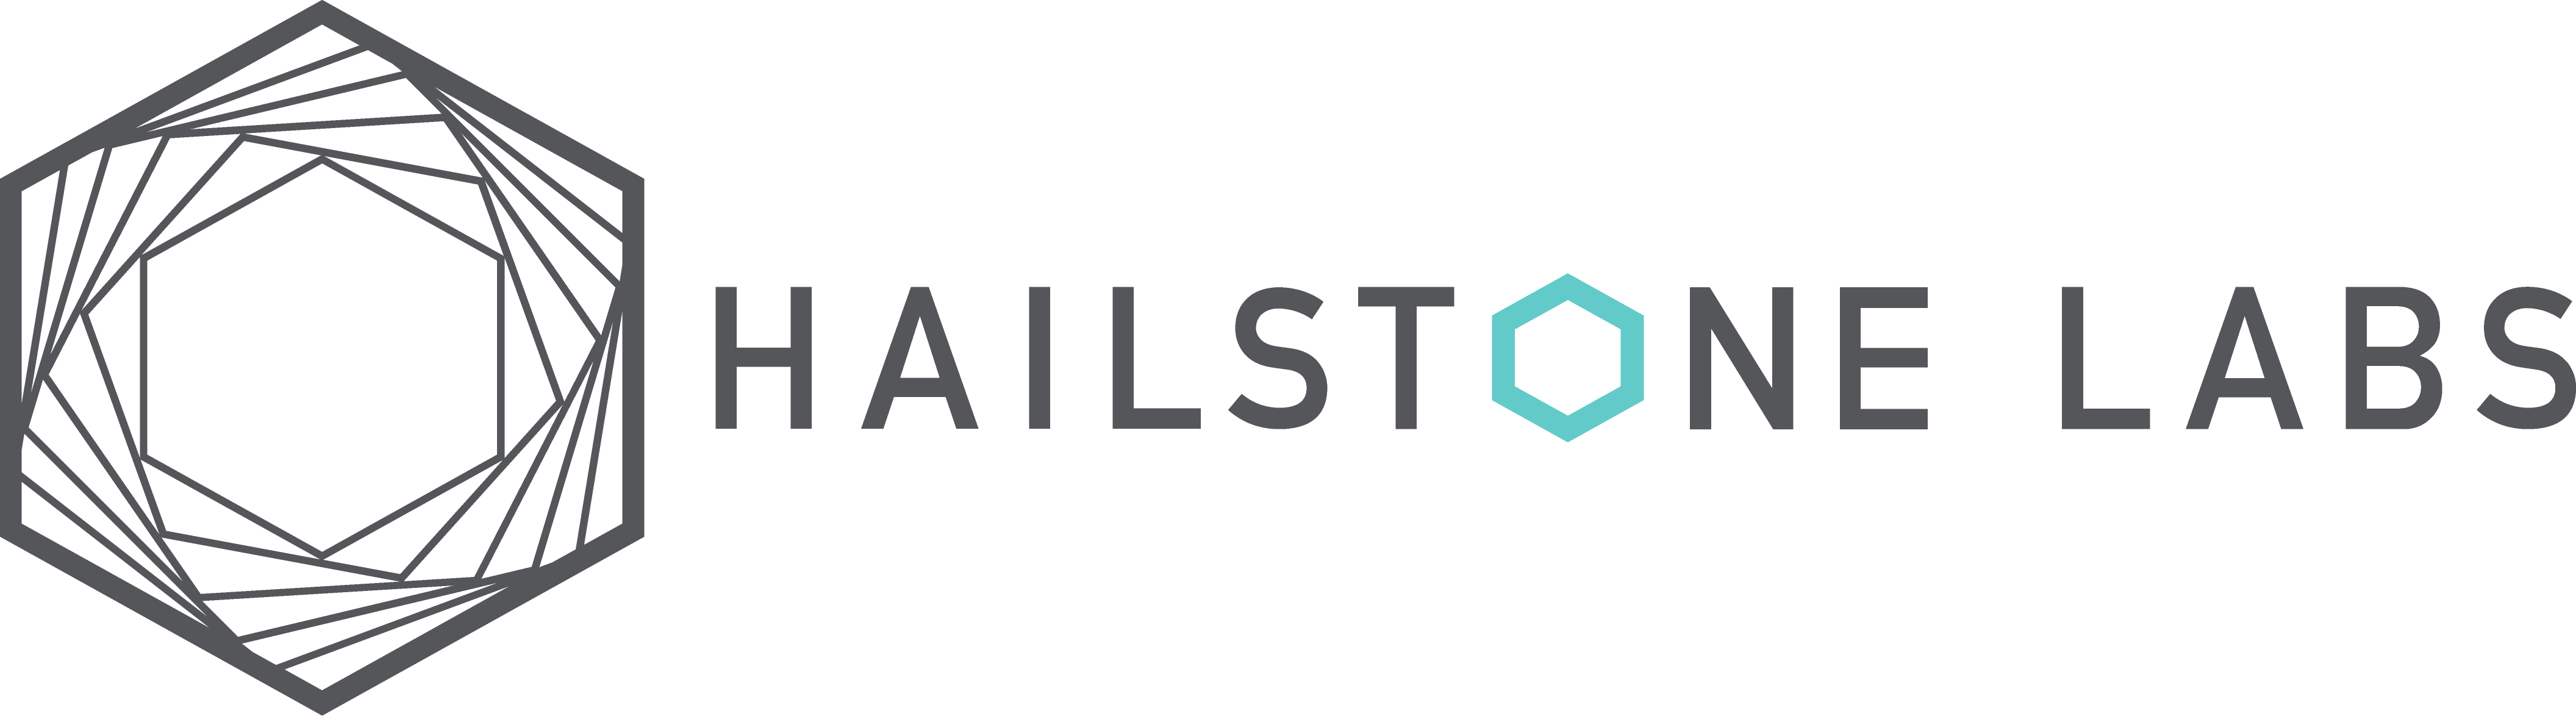 Hailstone Labs | Lead investor